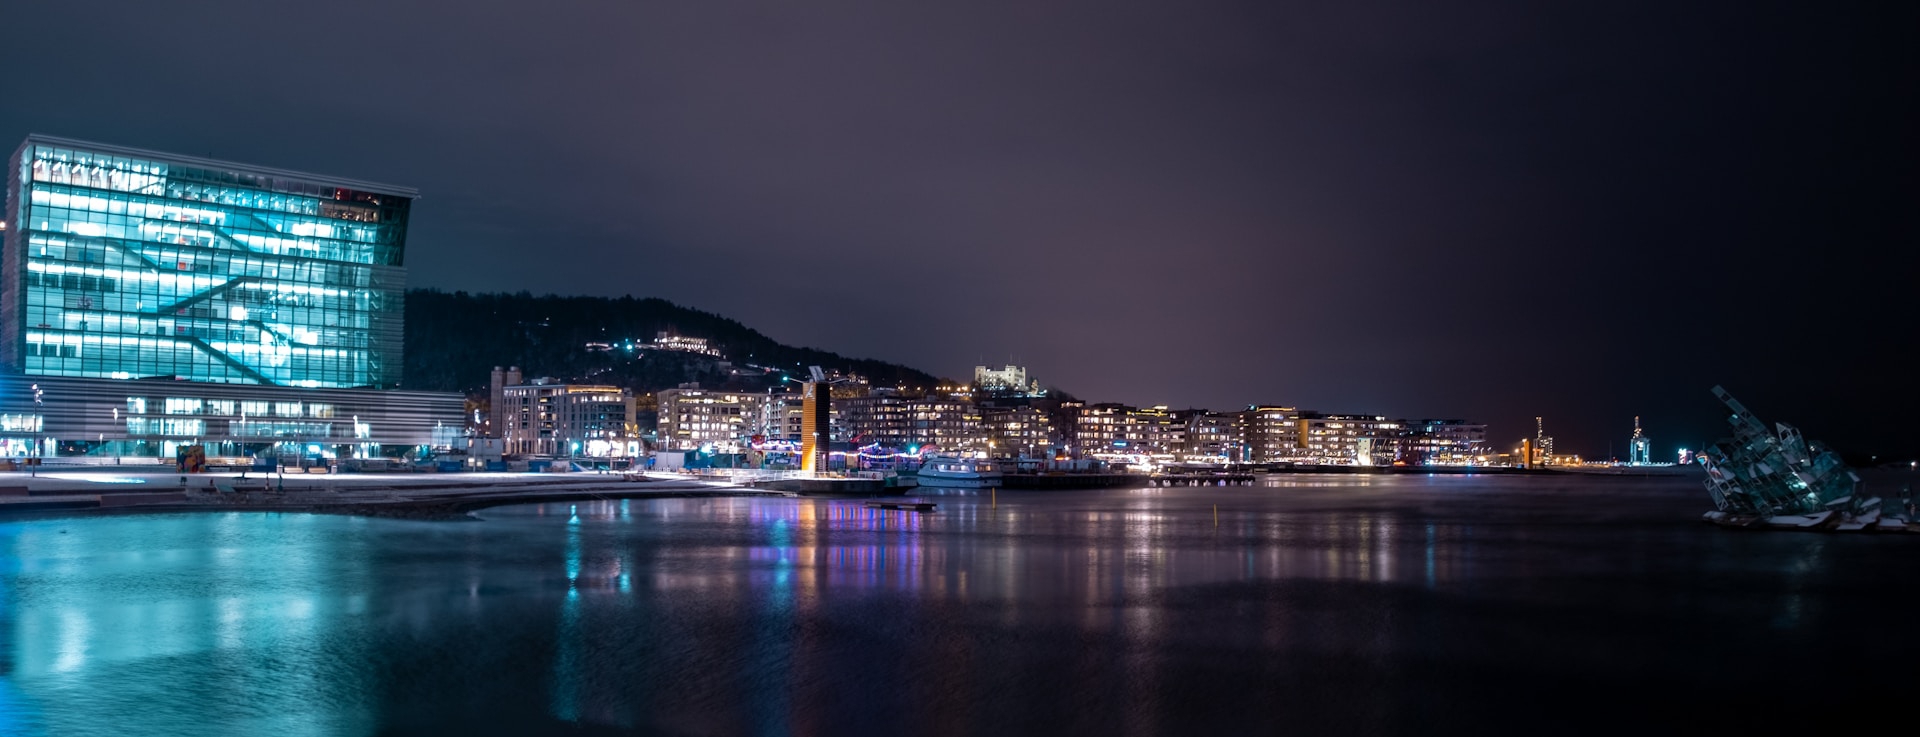 Photo of Oslo by night